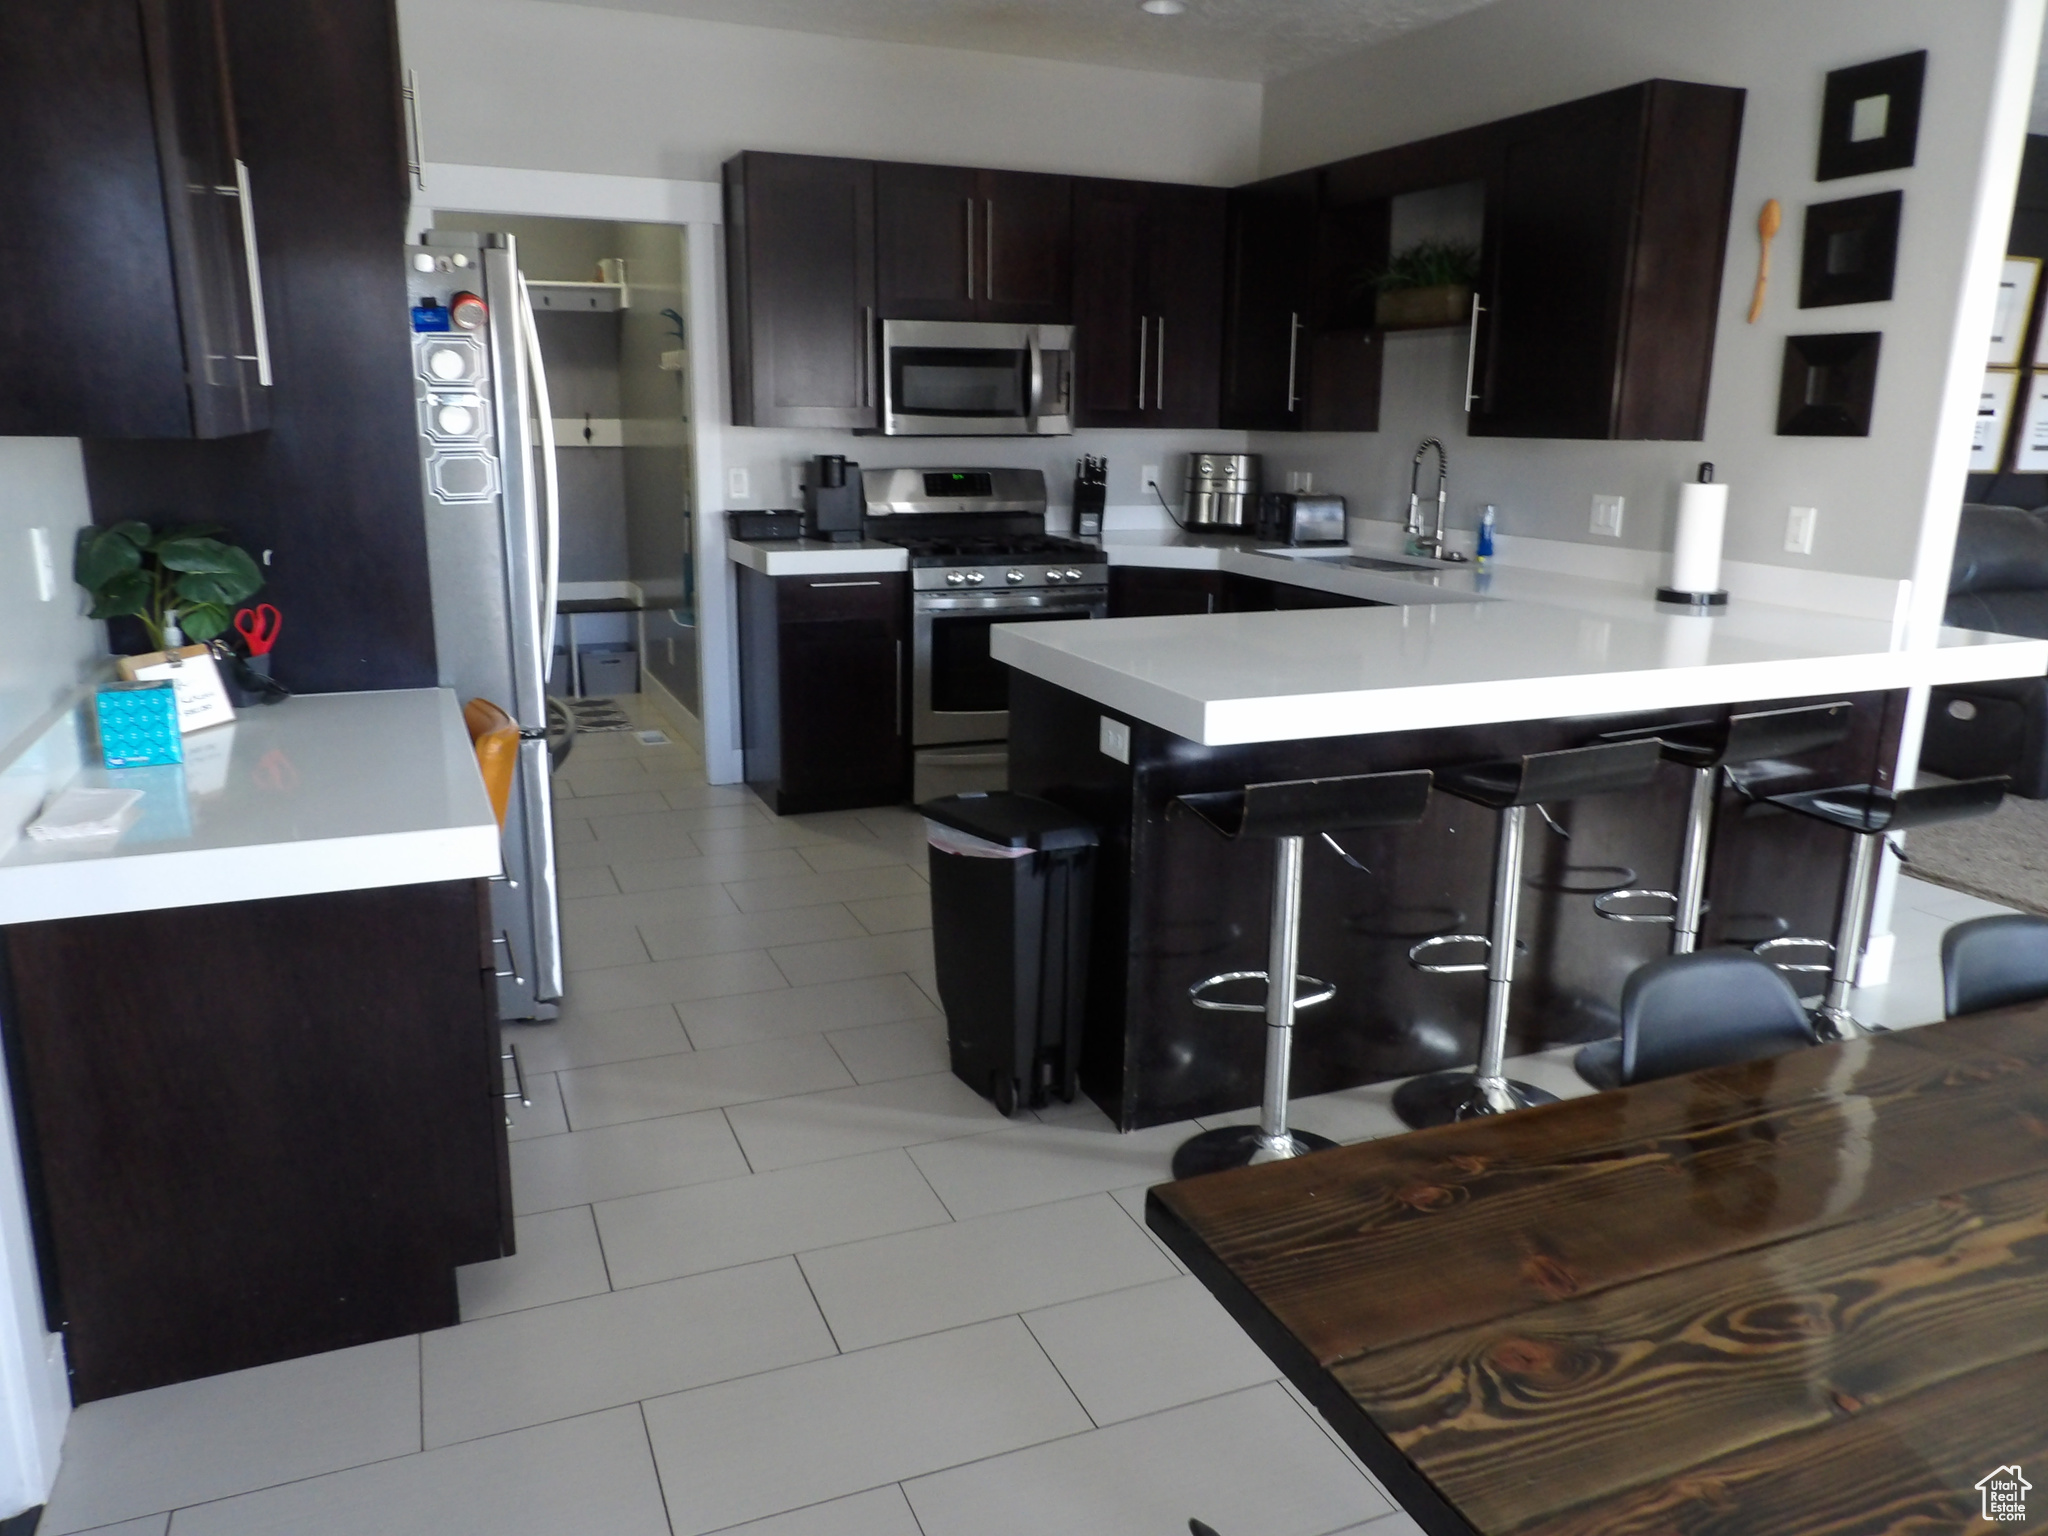 Kitchen featuring a breakfast bar area, stainless steel appliances, sink, light tile floors, and kitchen peninsula